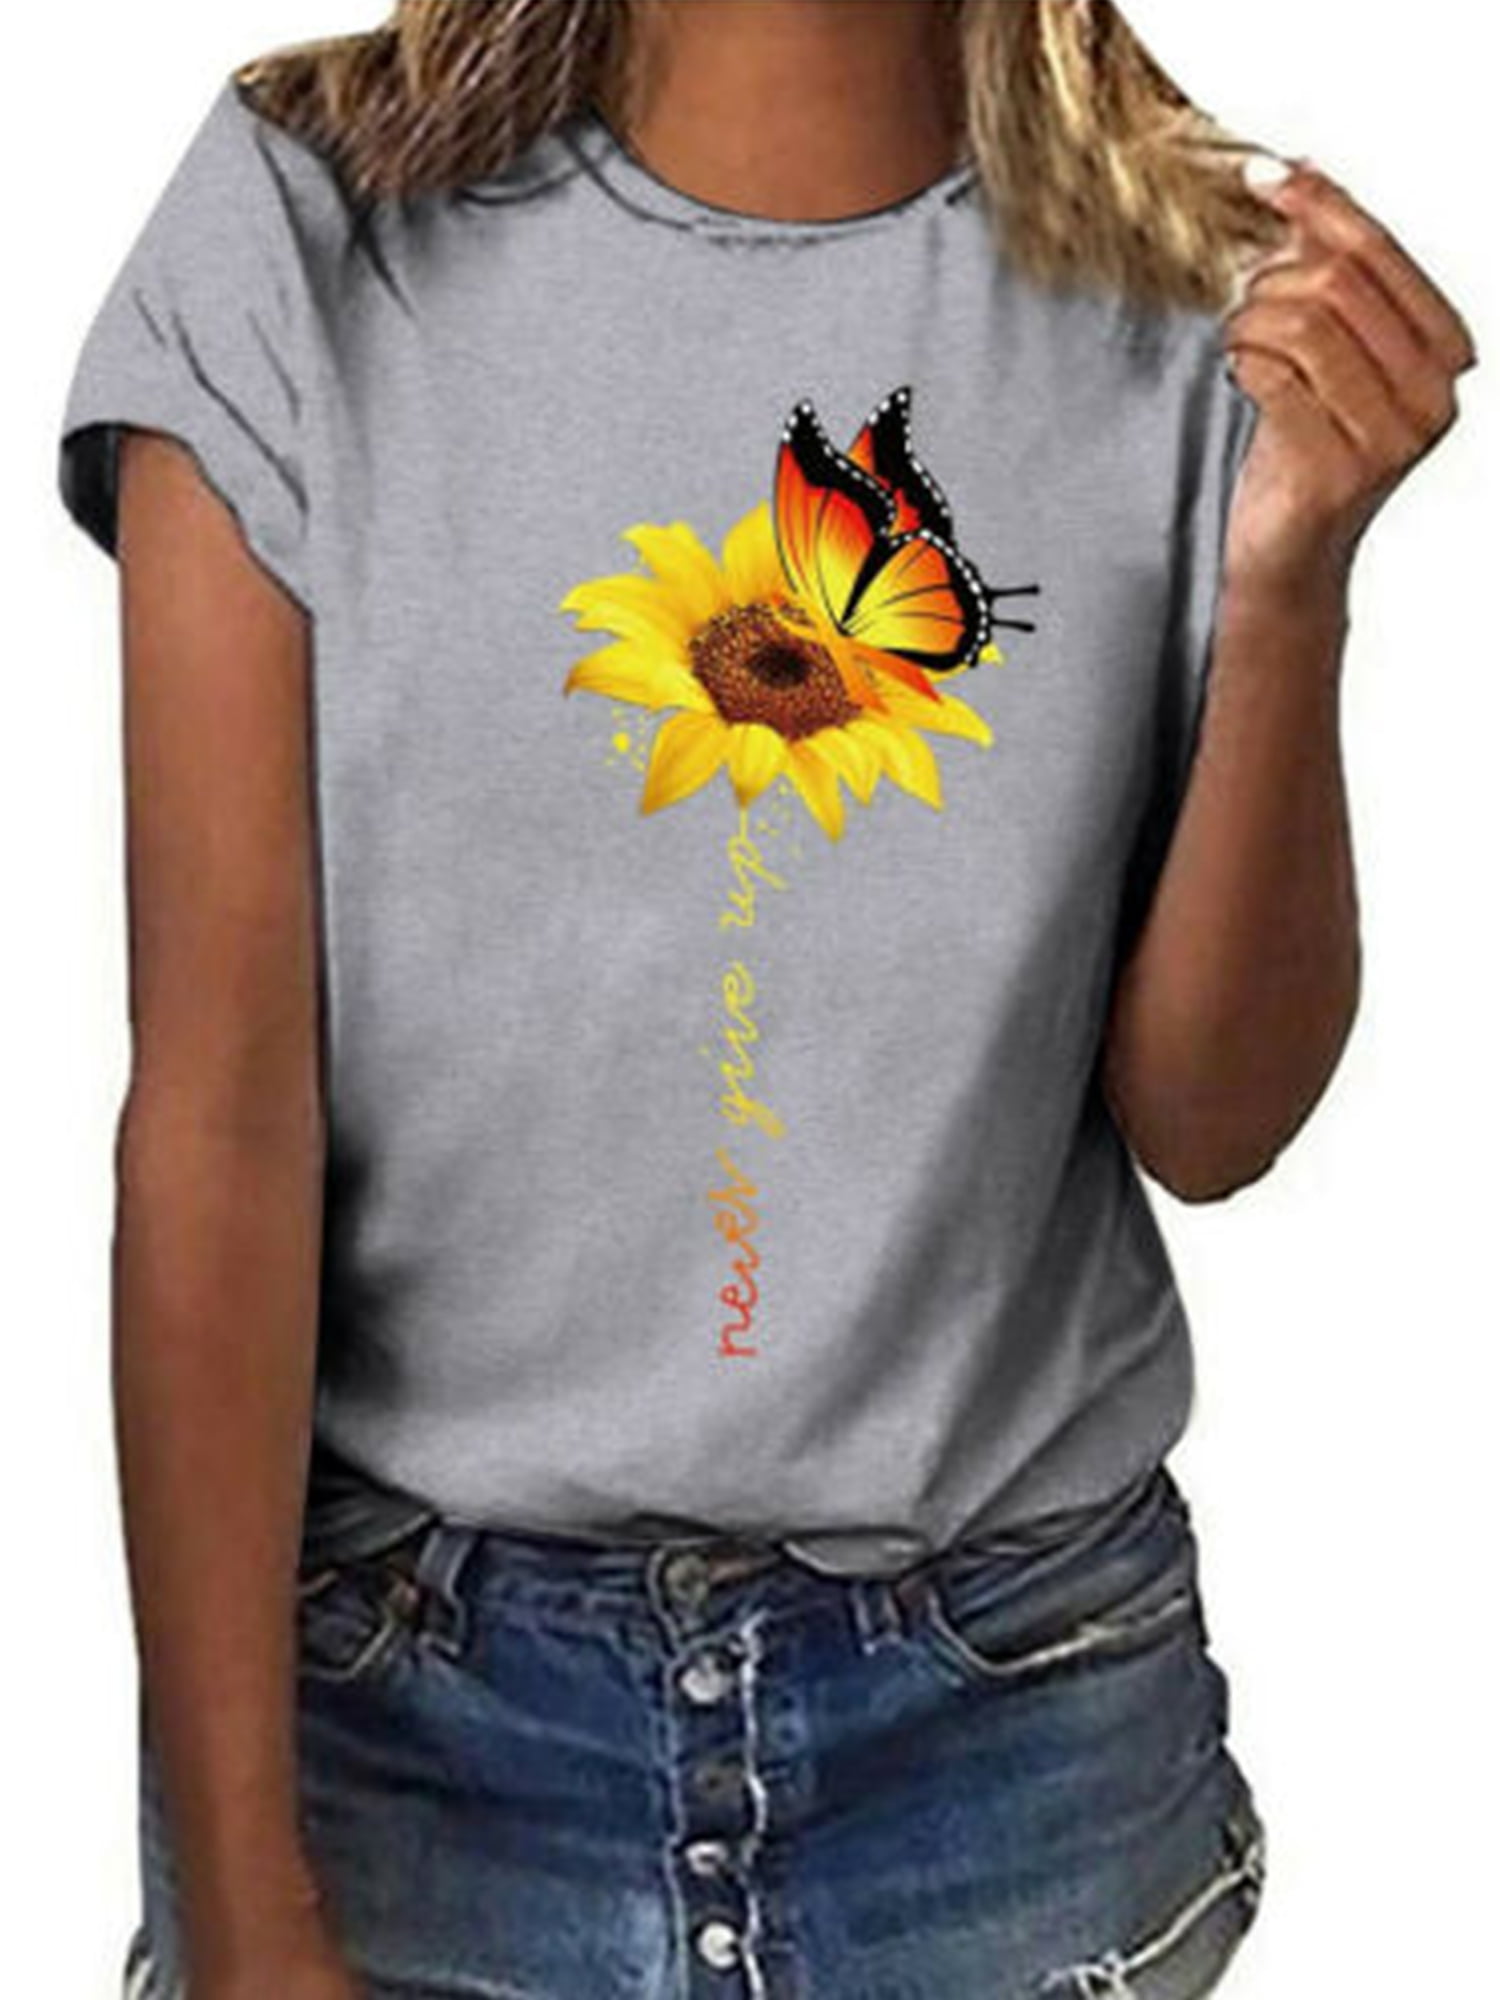 Summer Short Sleeve T Shirt for Women Casual Sunflower Print Top Ladies ...